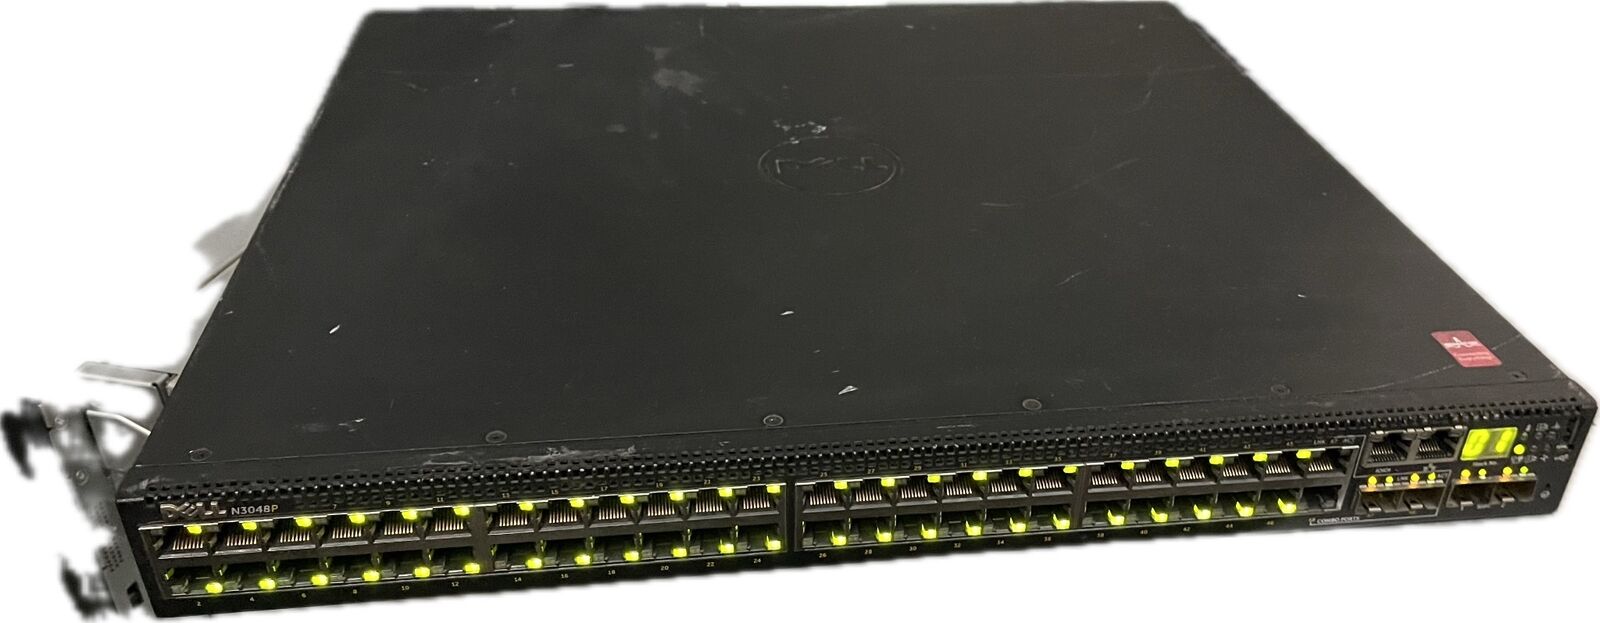 Dell Networking N3048P 48-Port PoE+ Network Switch w Dual 1100w Power Supply PSU